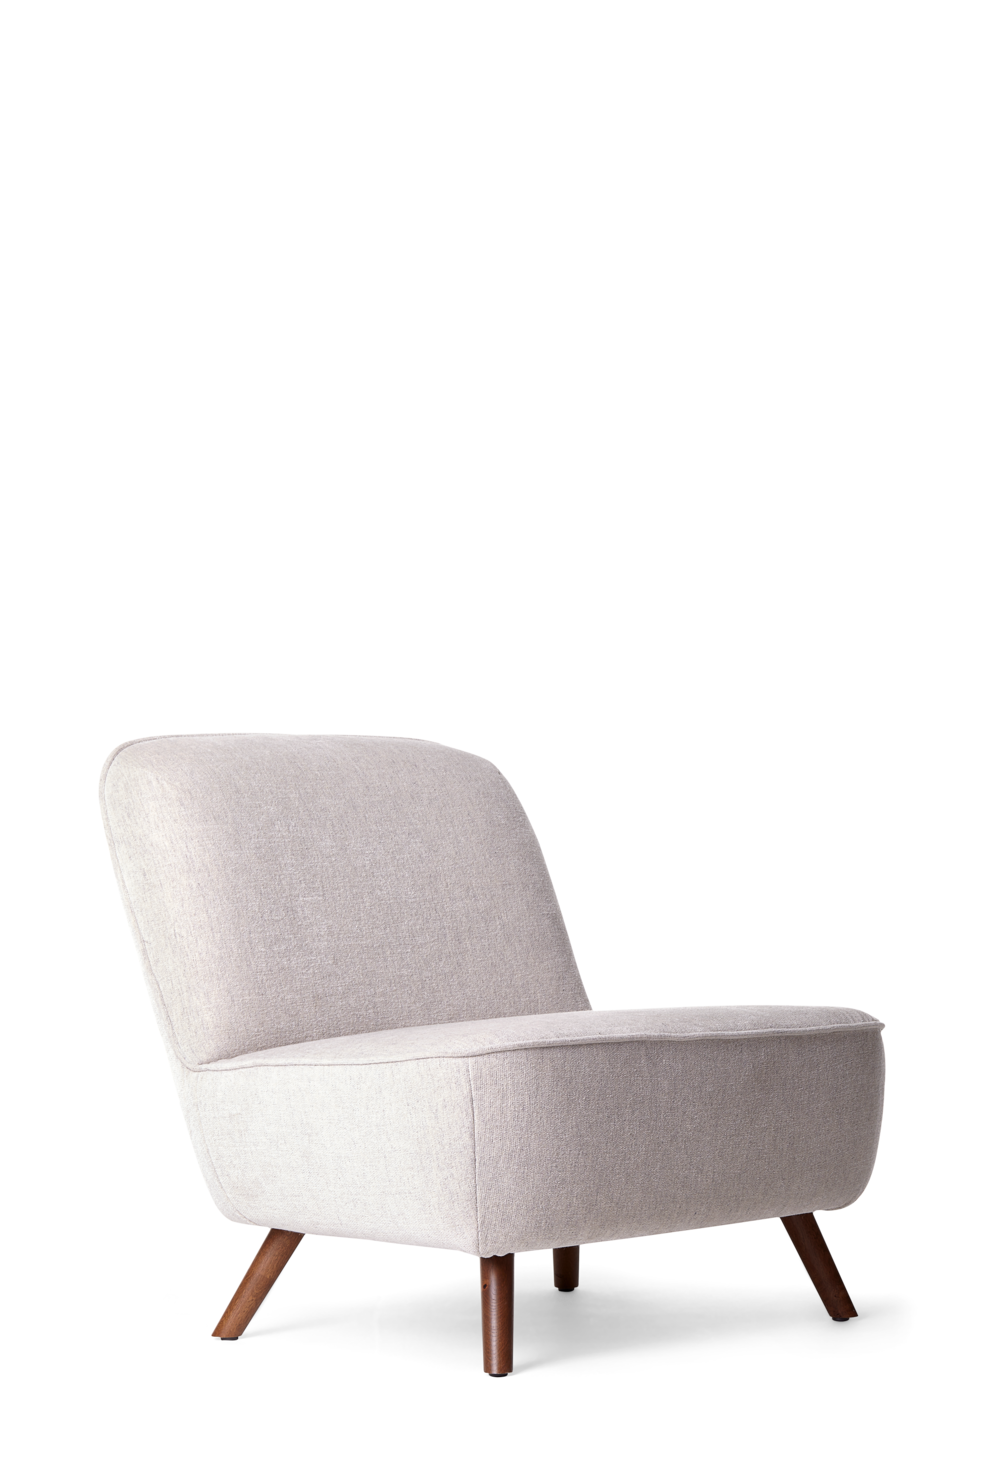 Group Cocktail Chair – Yeti Quinoa, Philippe Malouin